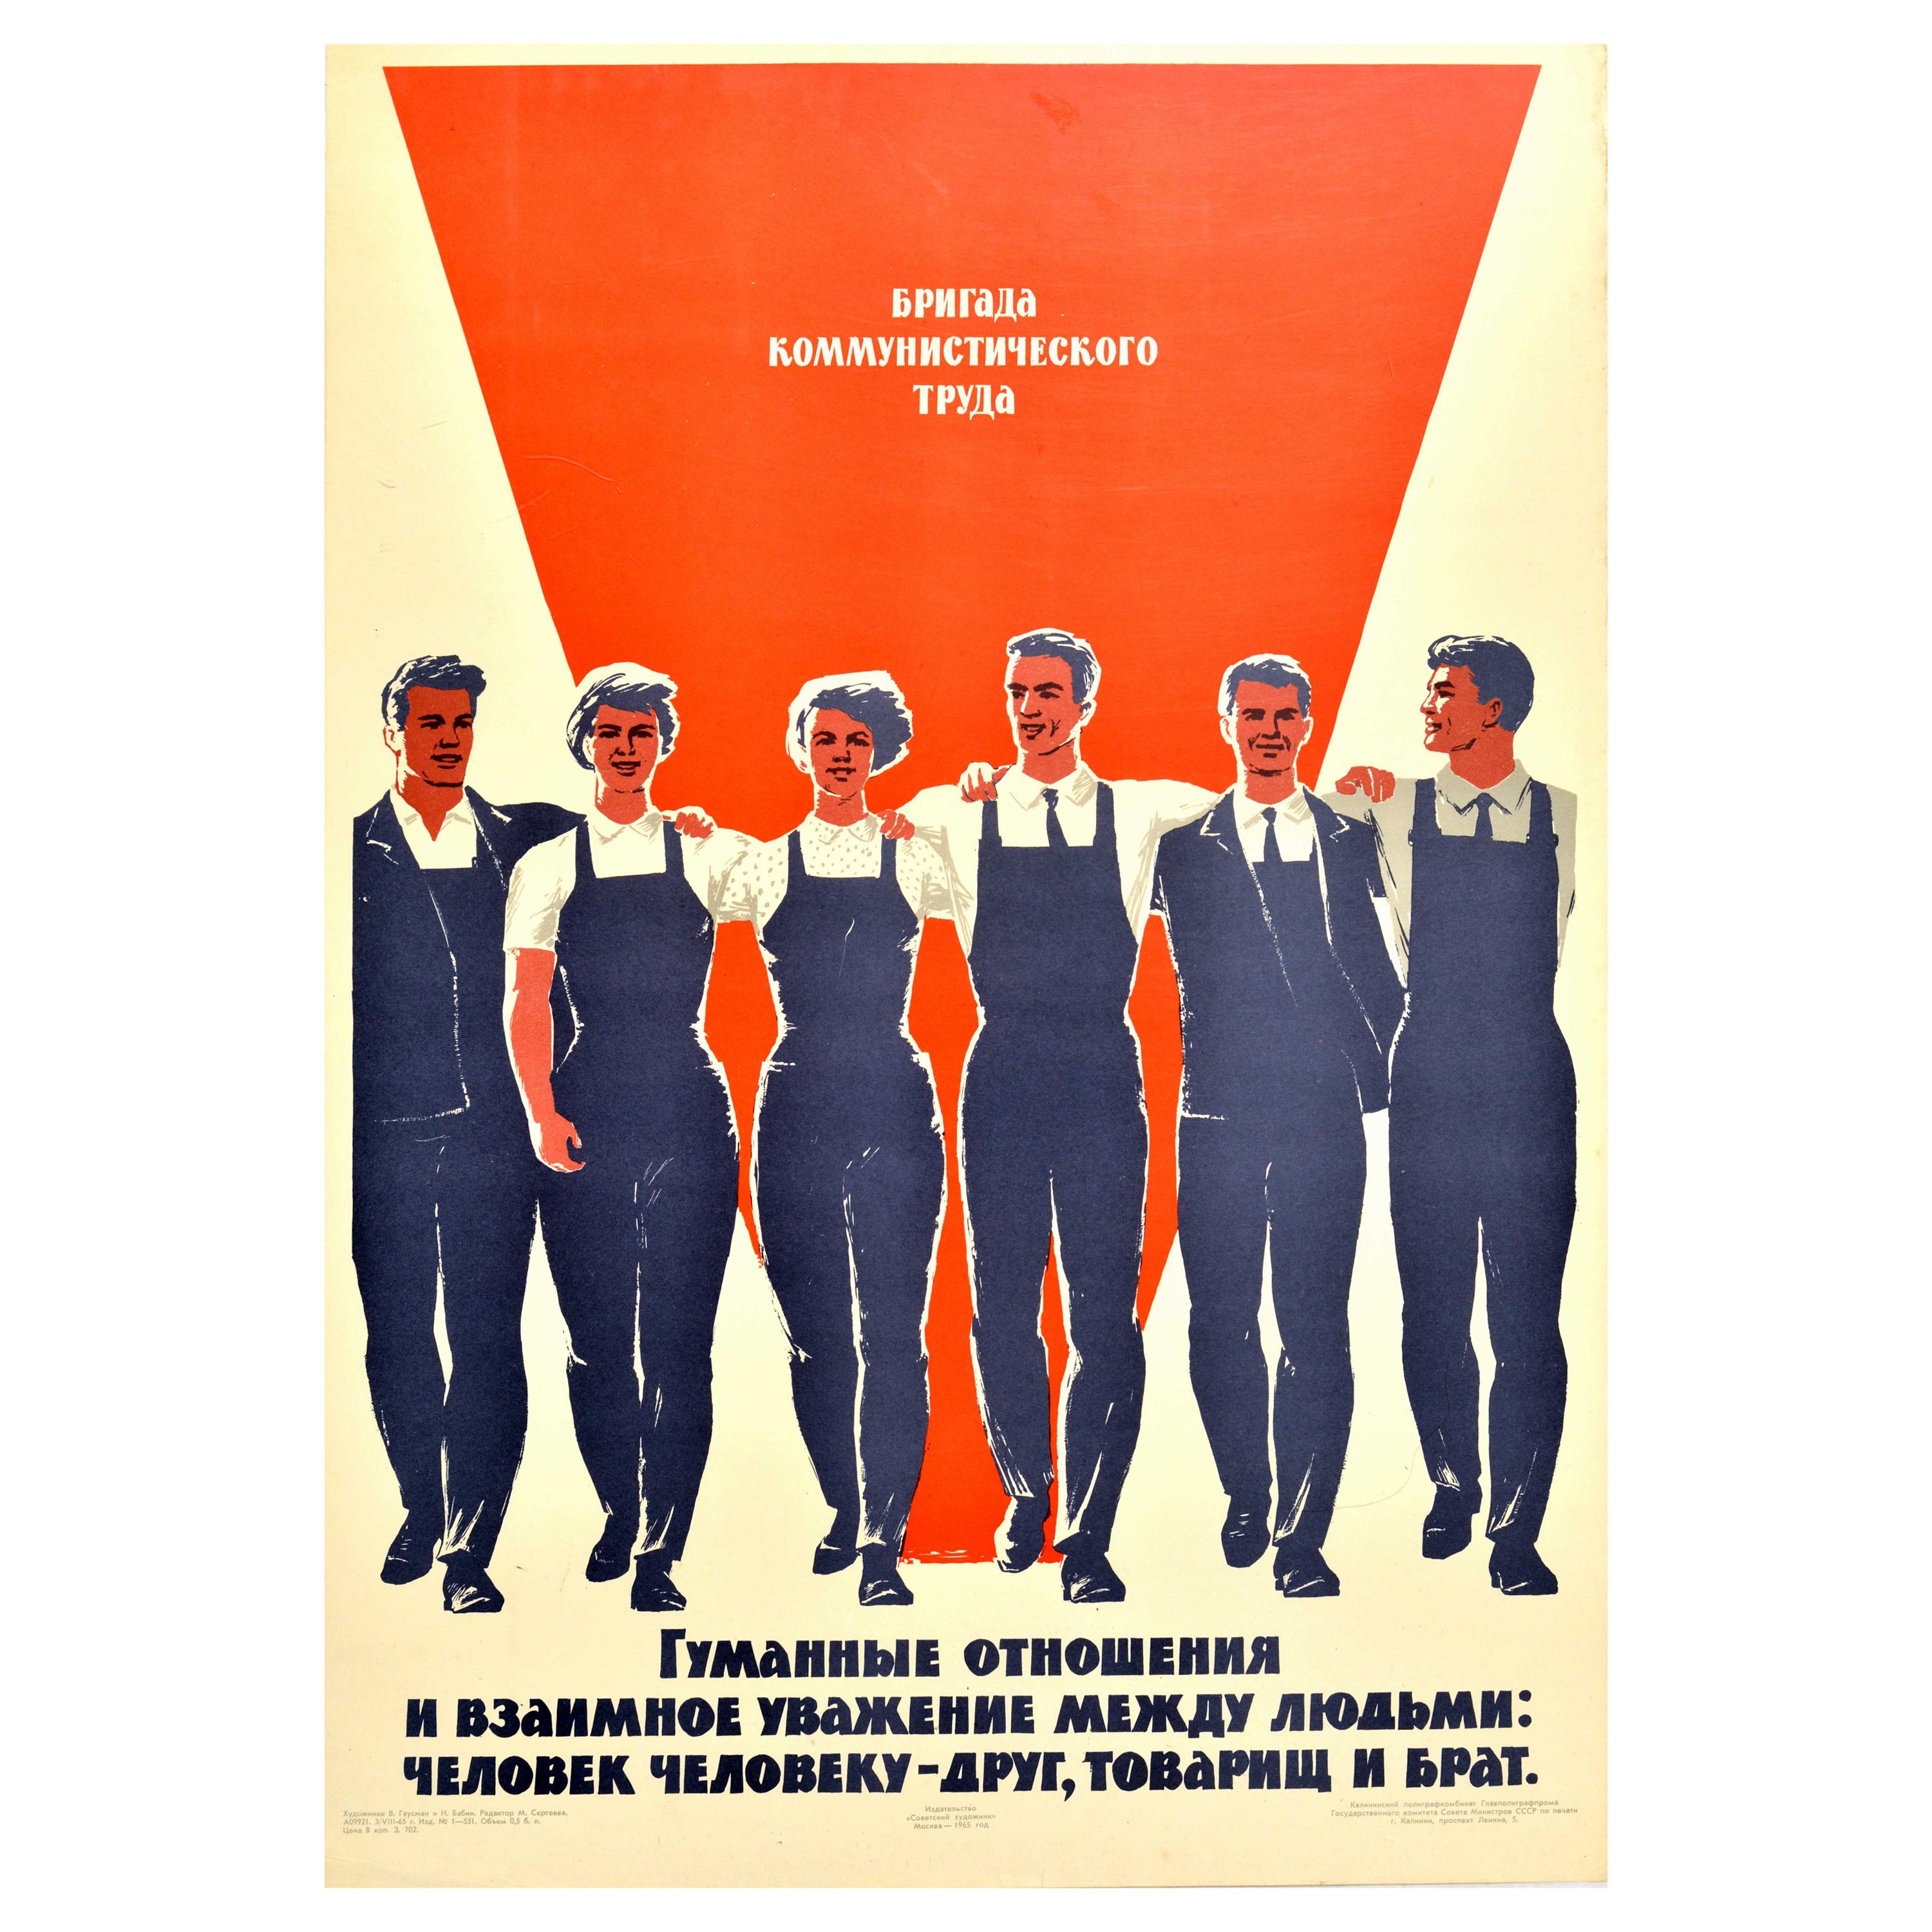 Original Vintage-Sowjet-Poster, Arbeiter, Team, Respekt, Genosse, Arbeitsplatz, Motivation